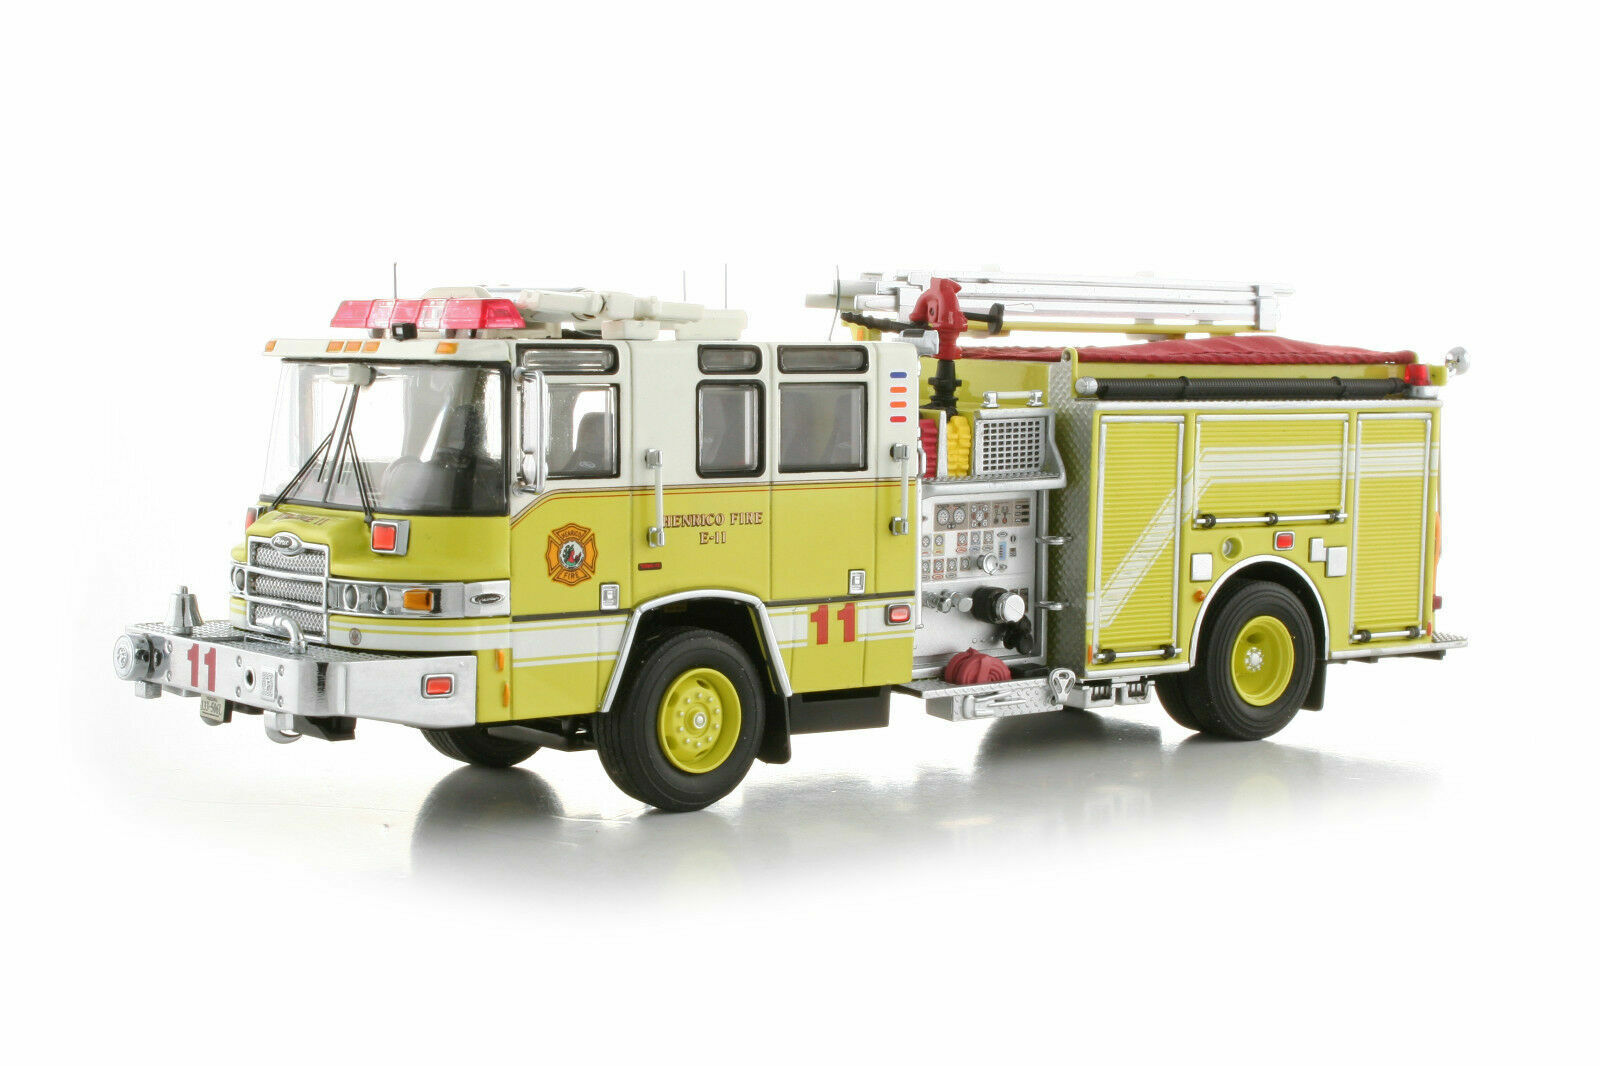 Pierce Quantum Pumper Fire Engine - Henrico #11 - TWH 1:50 Scale #081C-01175 New